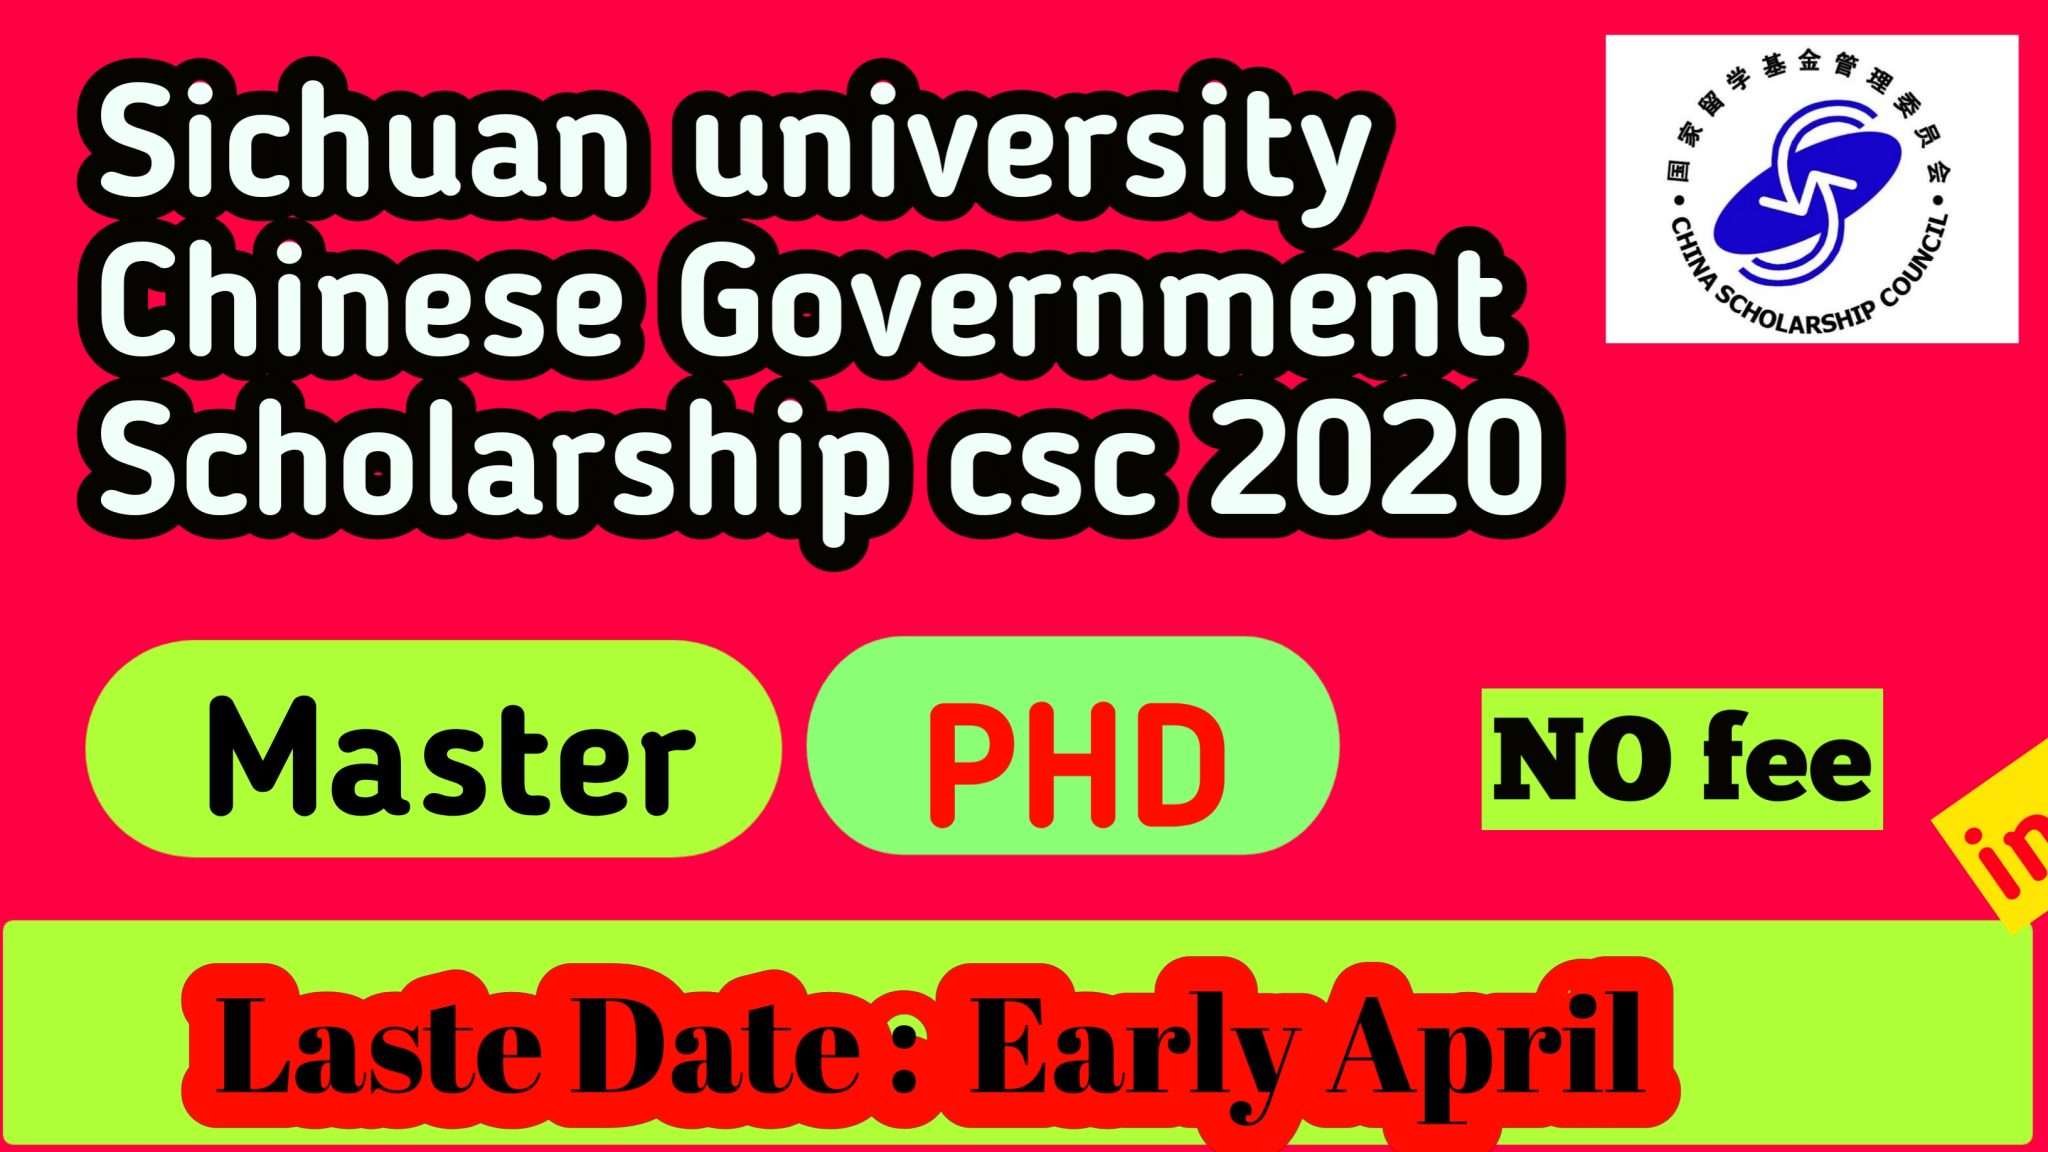 sichuan university scholarship csc guide